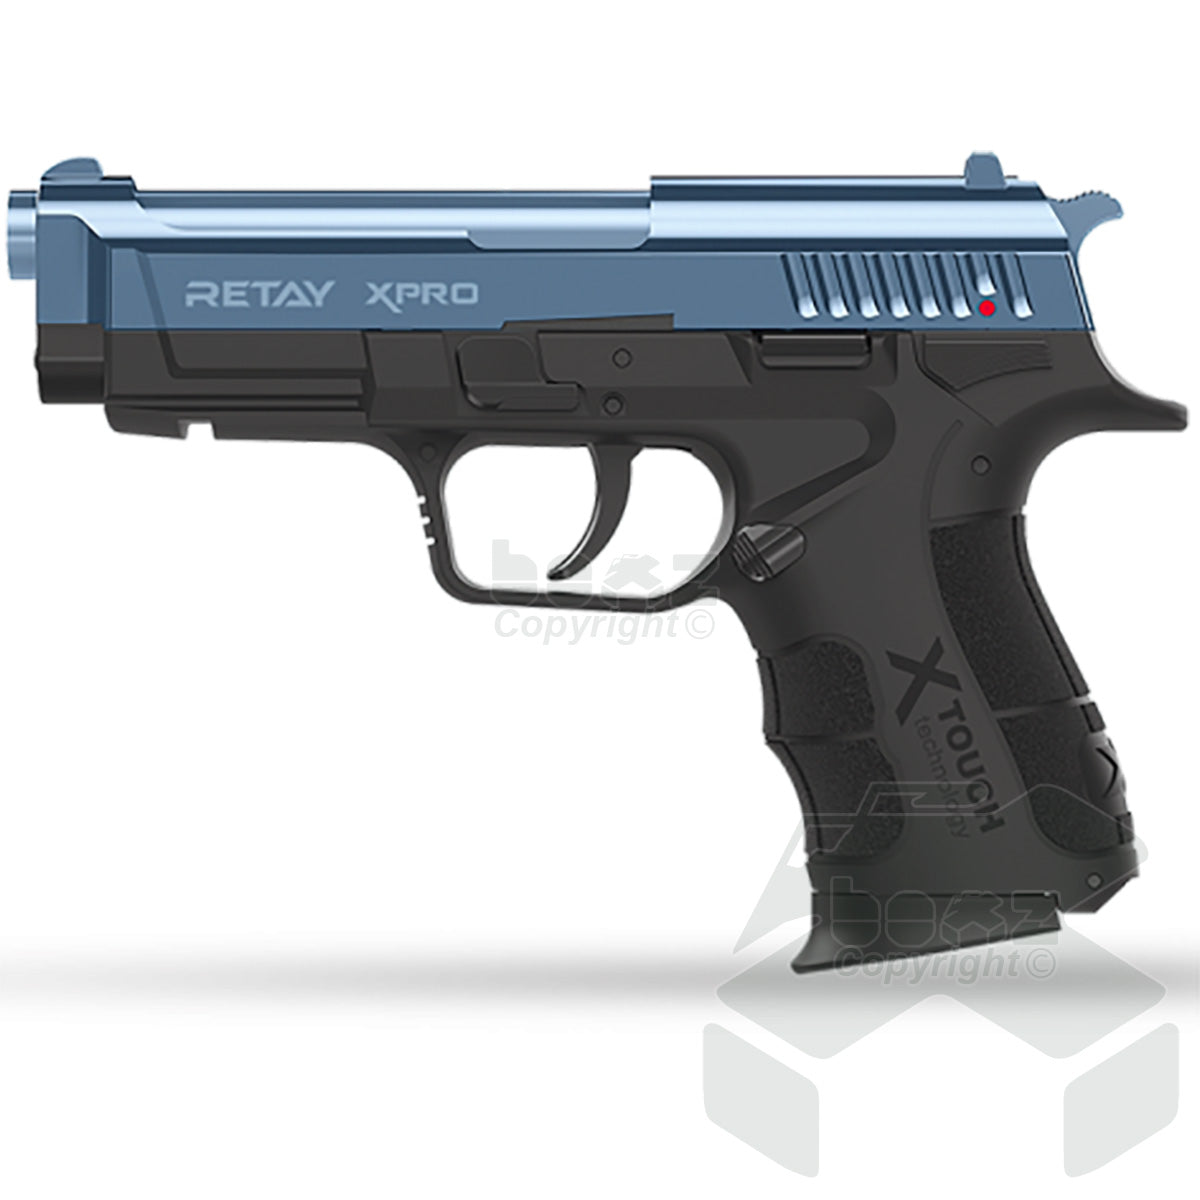 Retay Xpro Blank Firing Pistol - 9mm  - Black